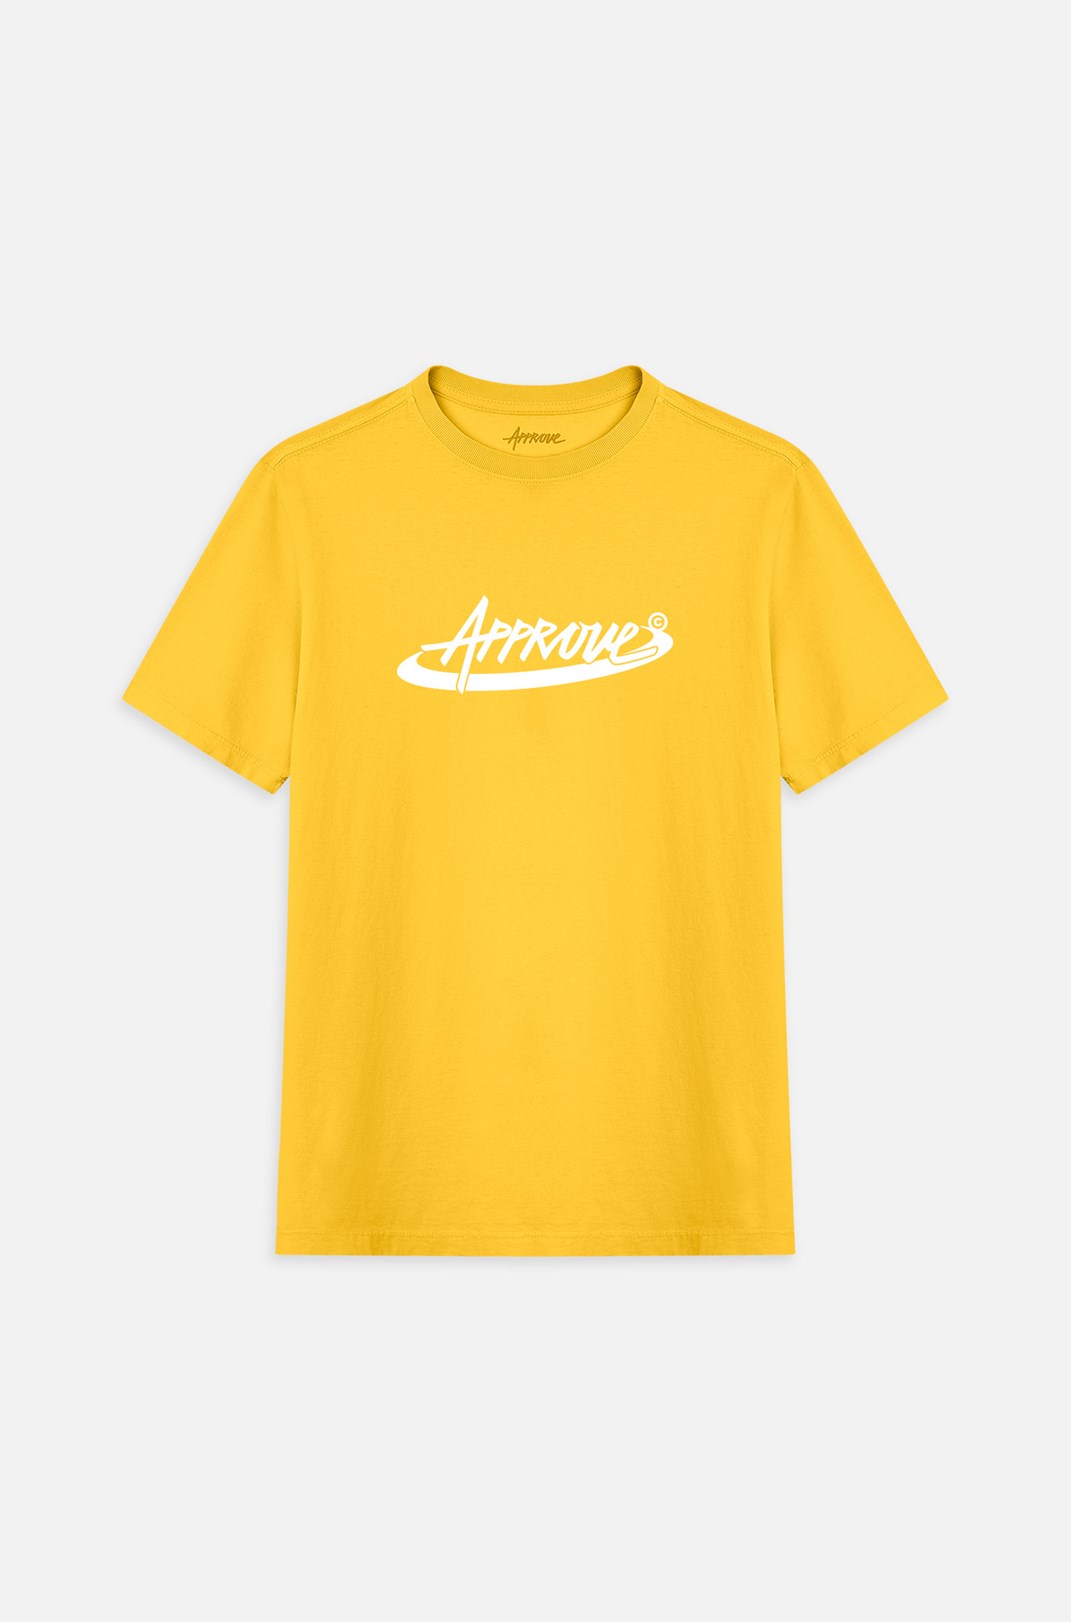 Camiseta Bold Approve Spare Amarela E Branca